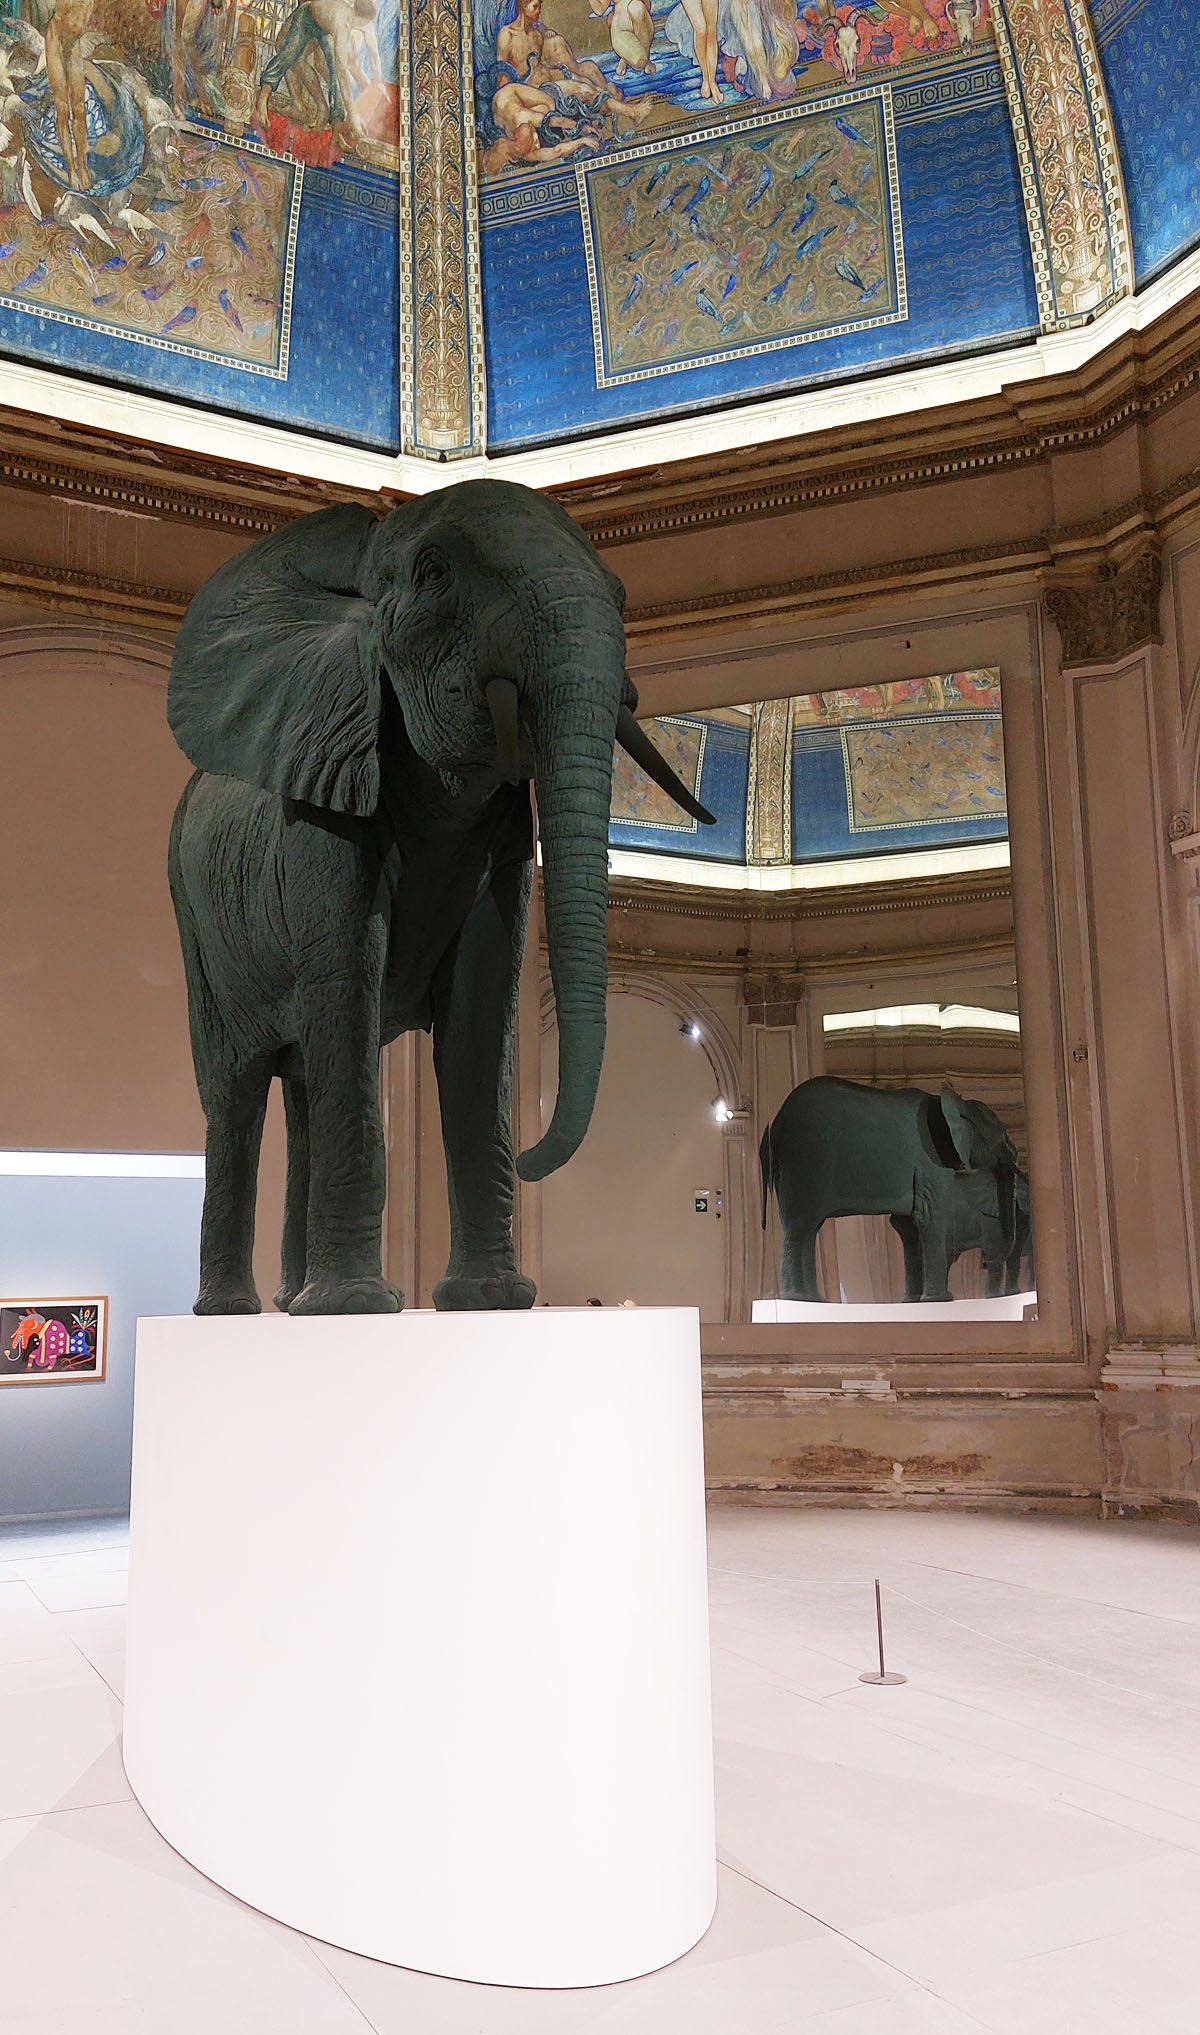 Venice Art Biennale 2022 - "Elephant" by Katharina Fritsch